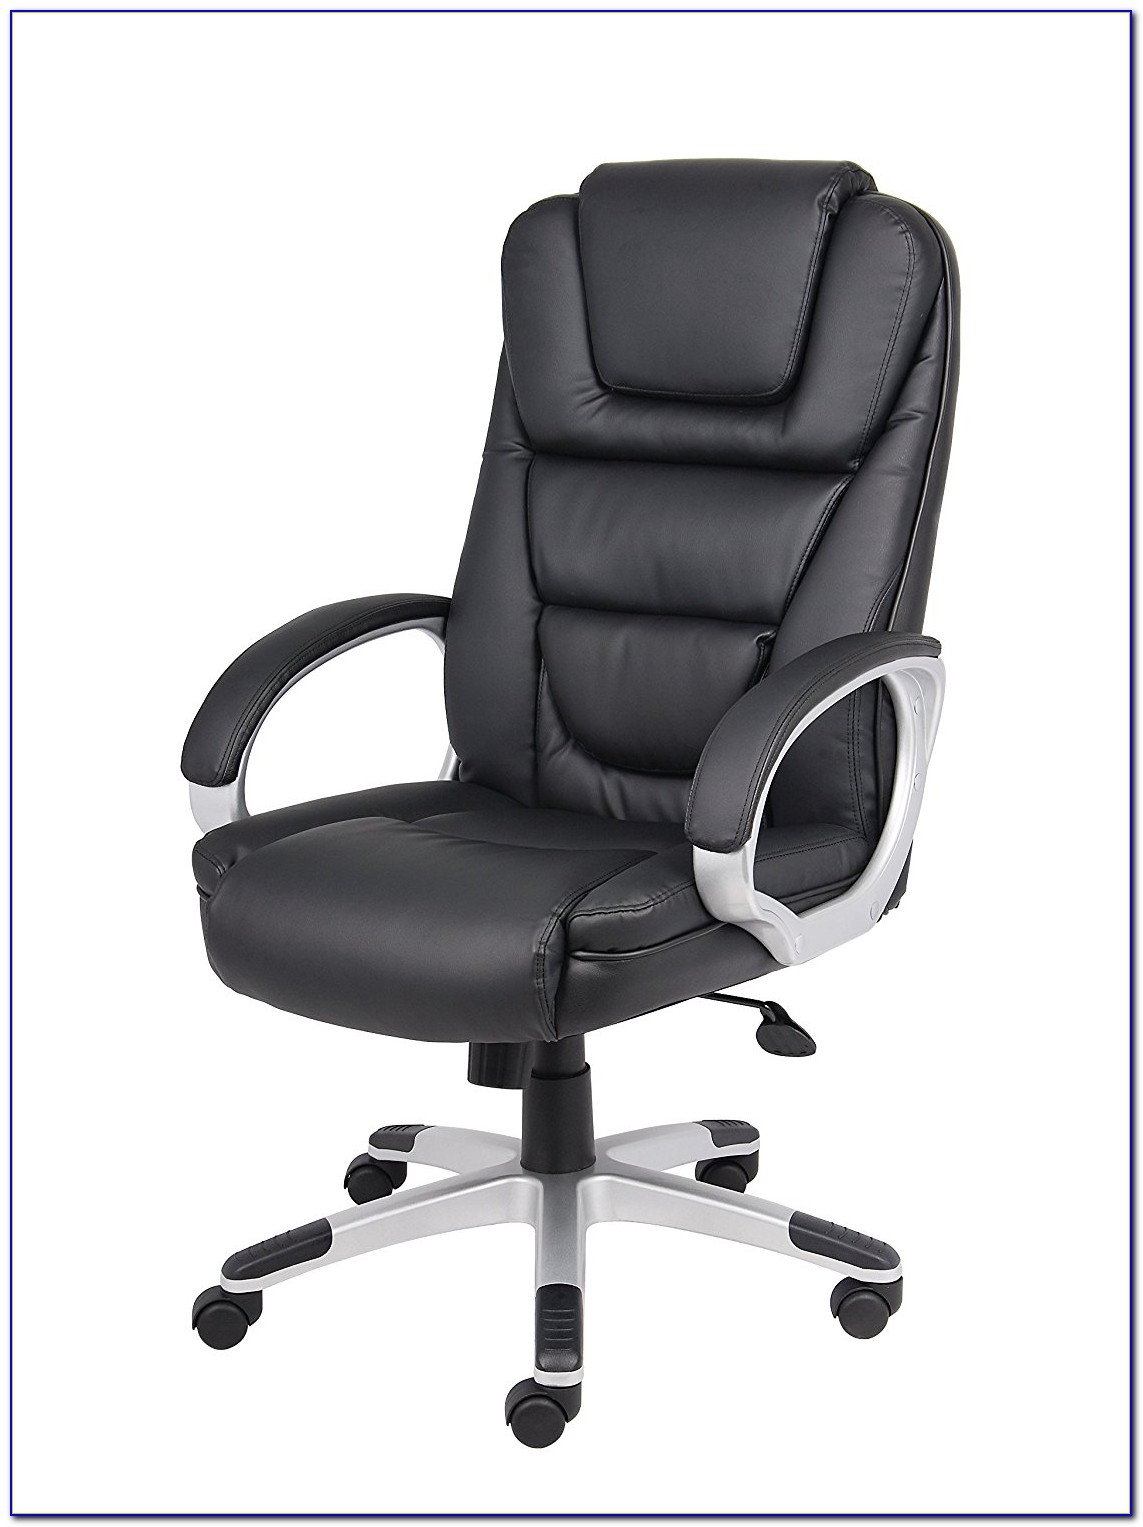 Best Office Chair For Back Pain Uk - Desk : Home Design Ideas #